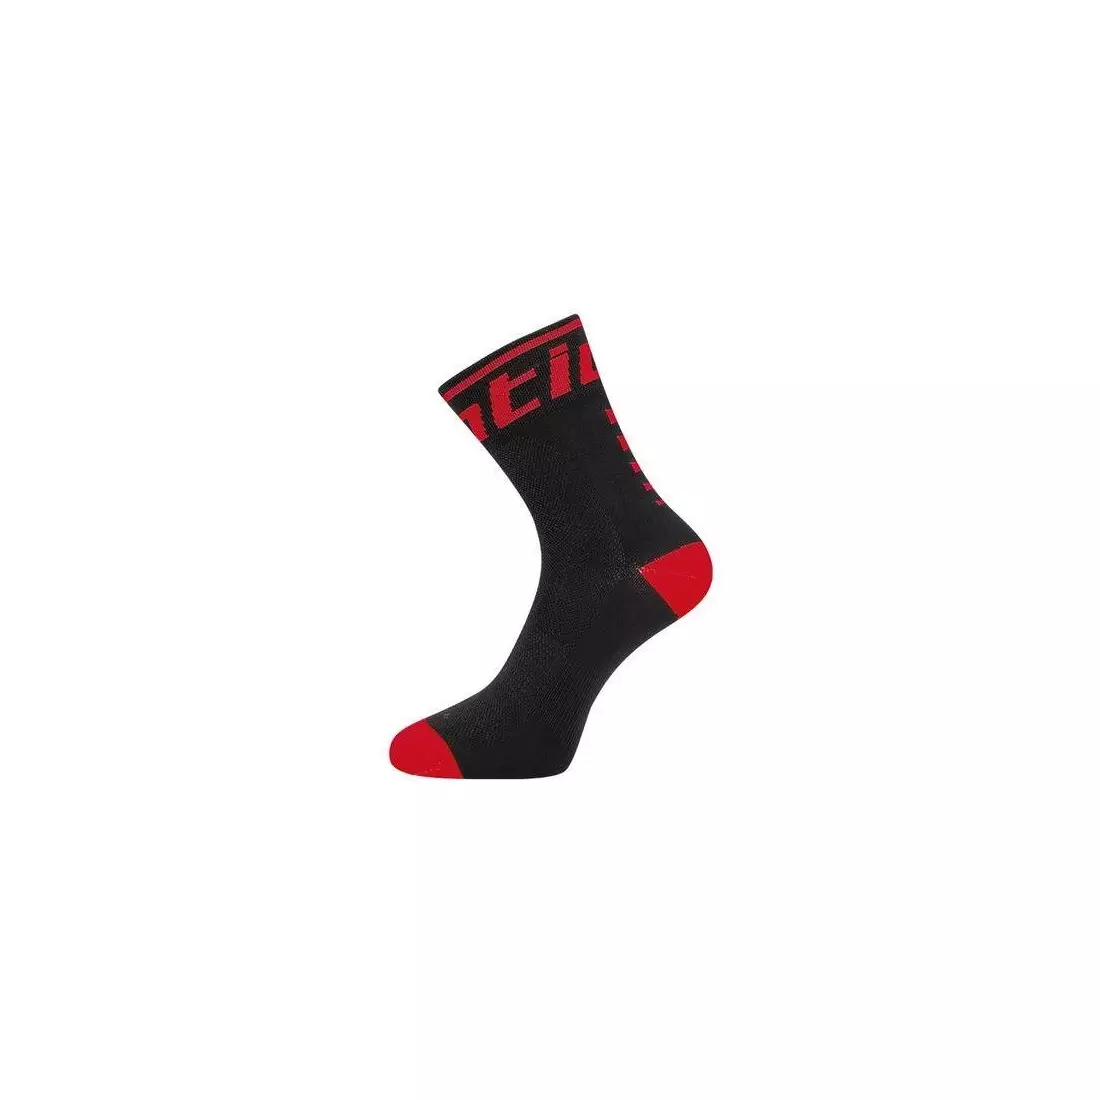 SANTIC cycling socks black and red 6C09054H